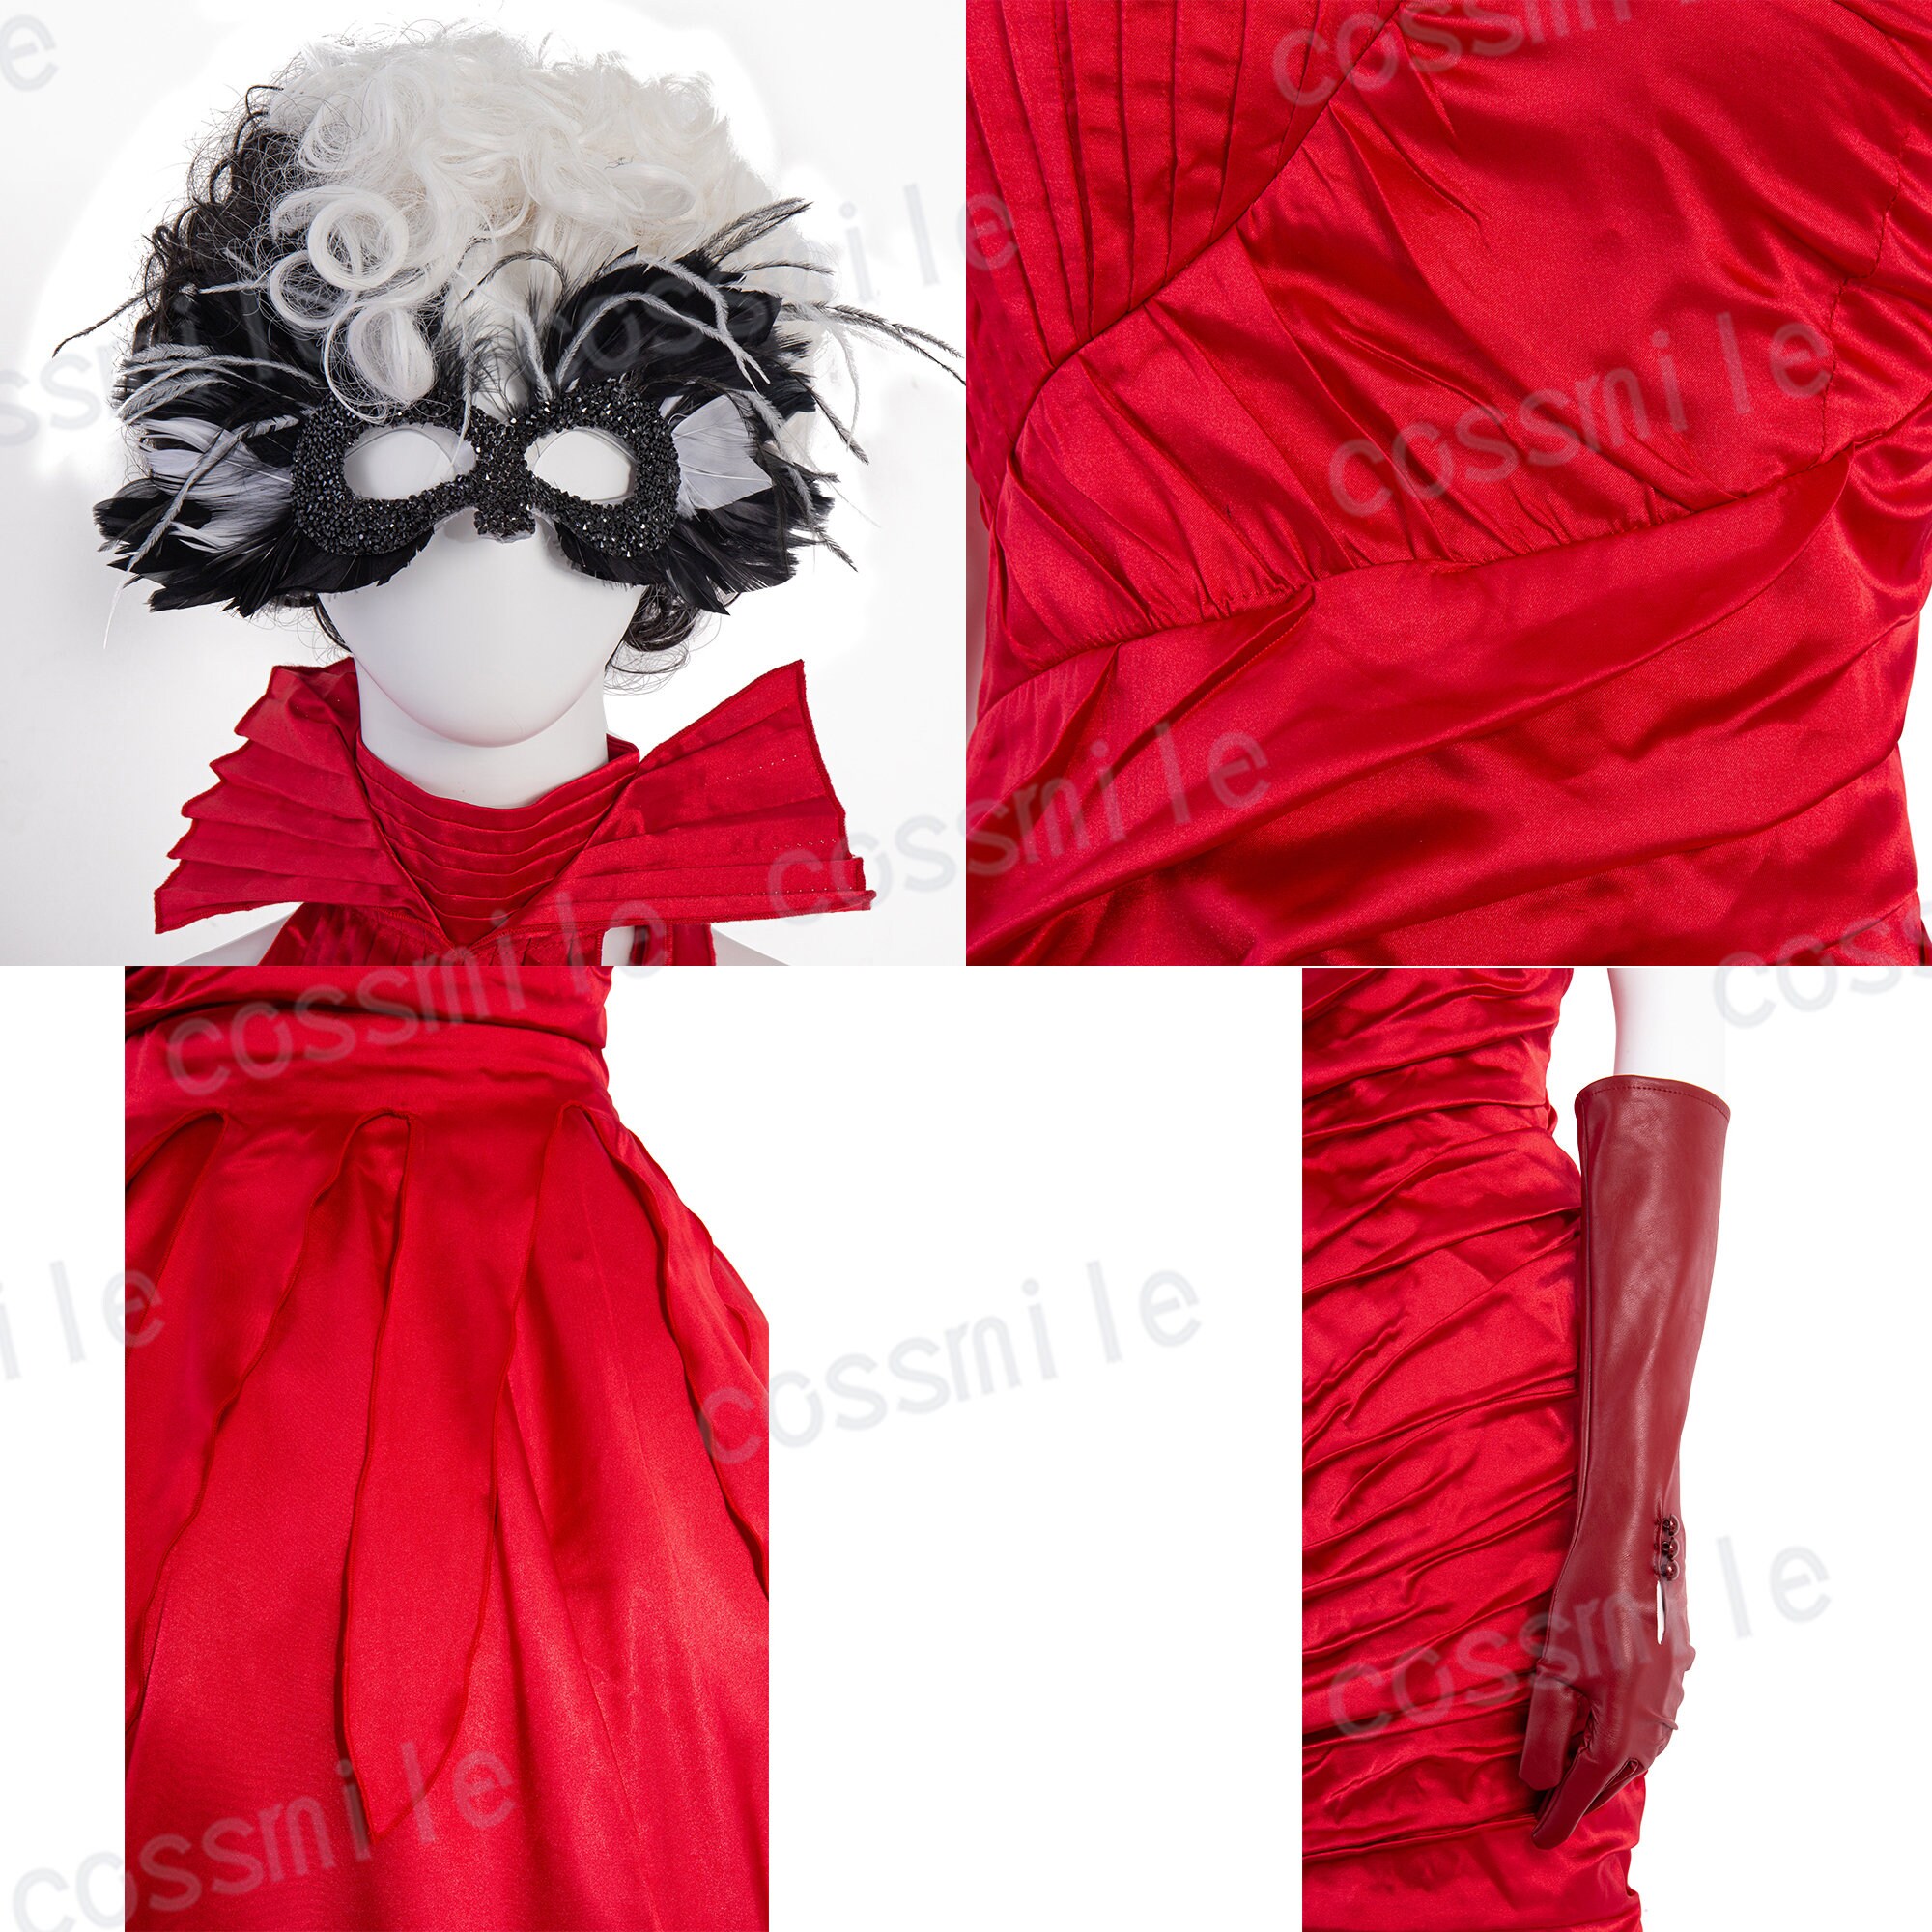 2021 Cruella Red Dress Cosplay Cruella de Vil Emma Stone Costumes Outfit, Female / S / Full Set + Wigs